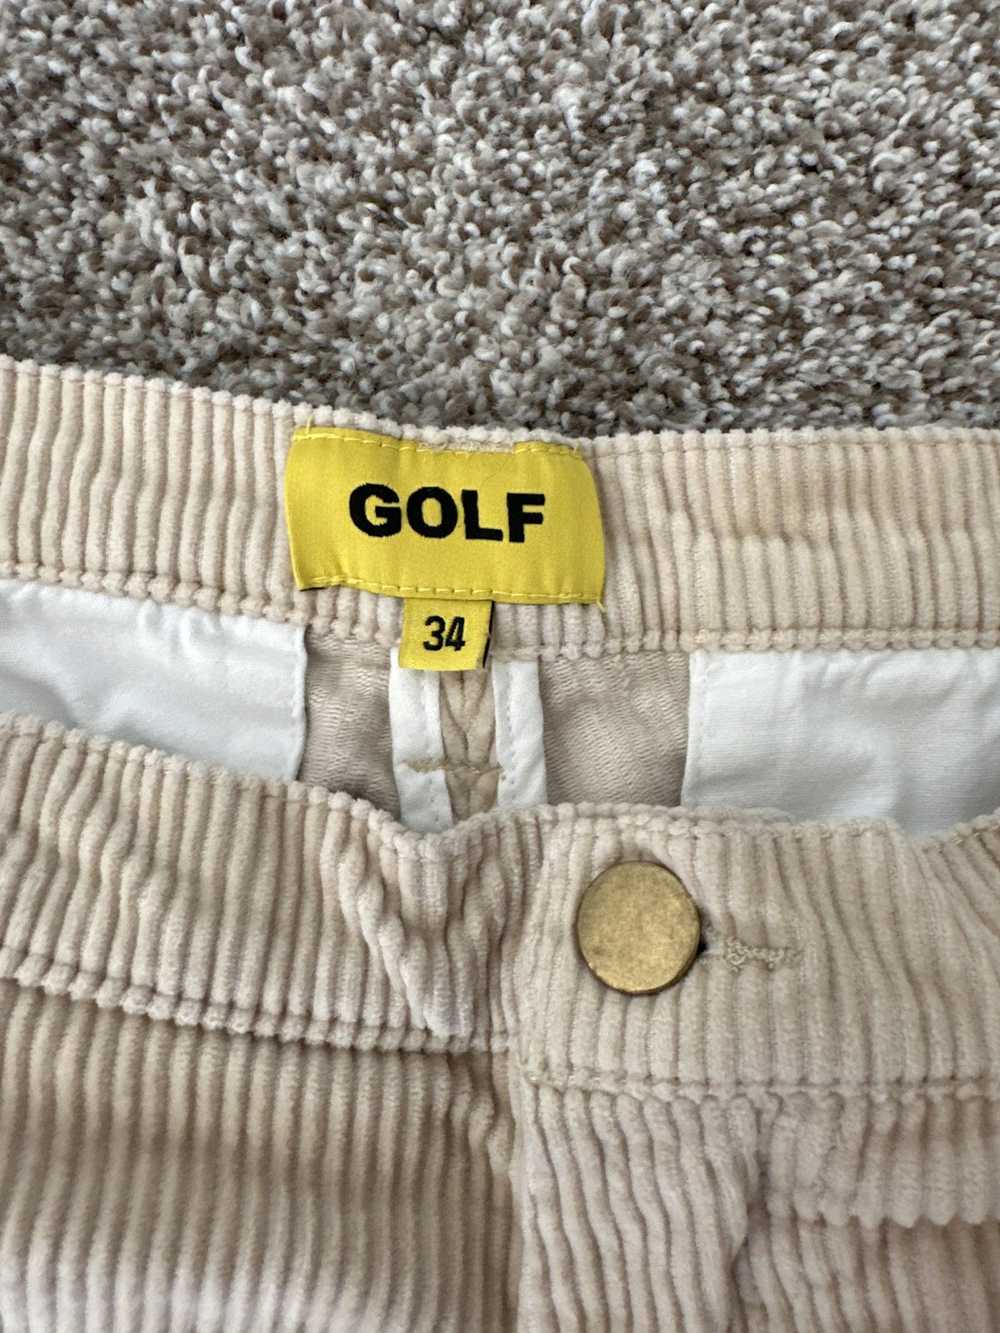 Golf Wang Golf Wang Corduroy Cargo Pants RARE - image 4